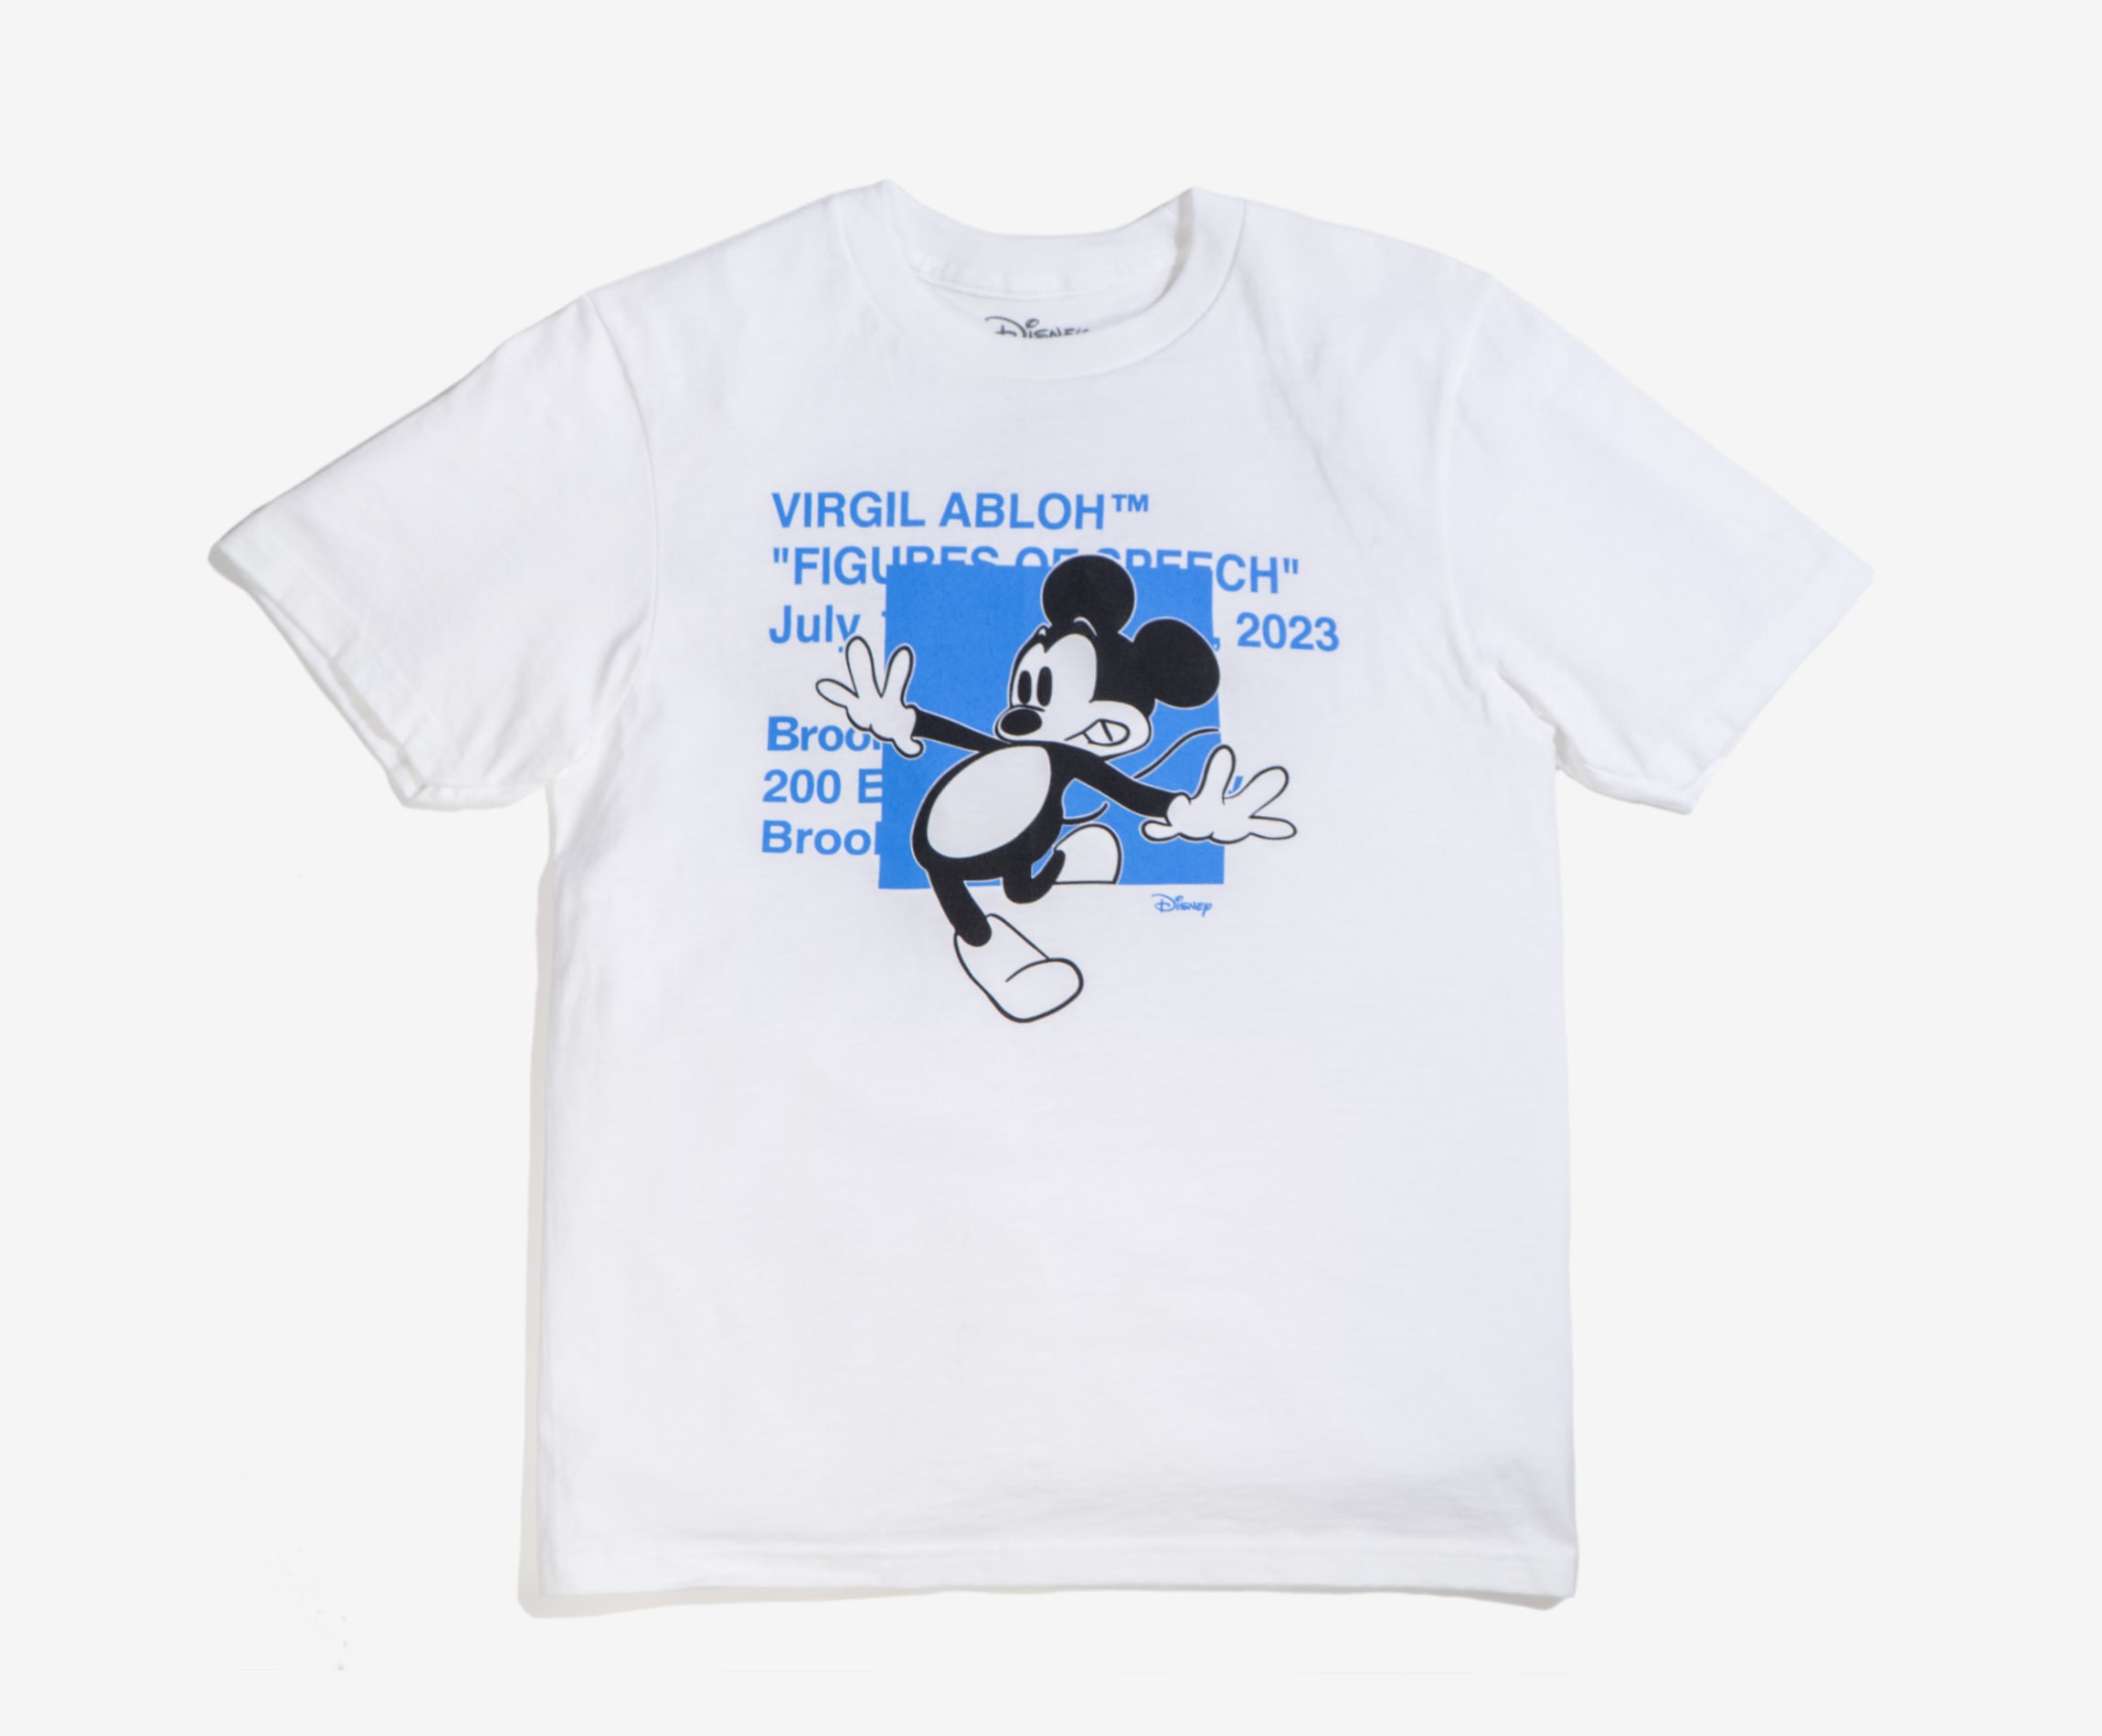 A Disney shirt is shown